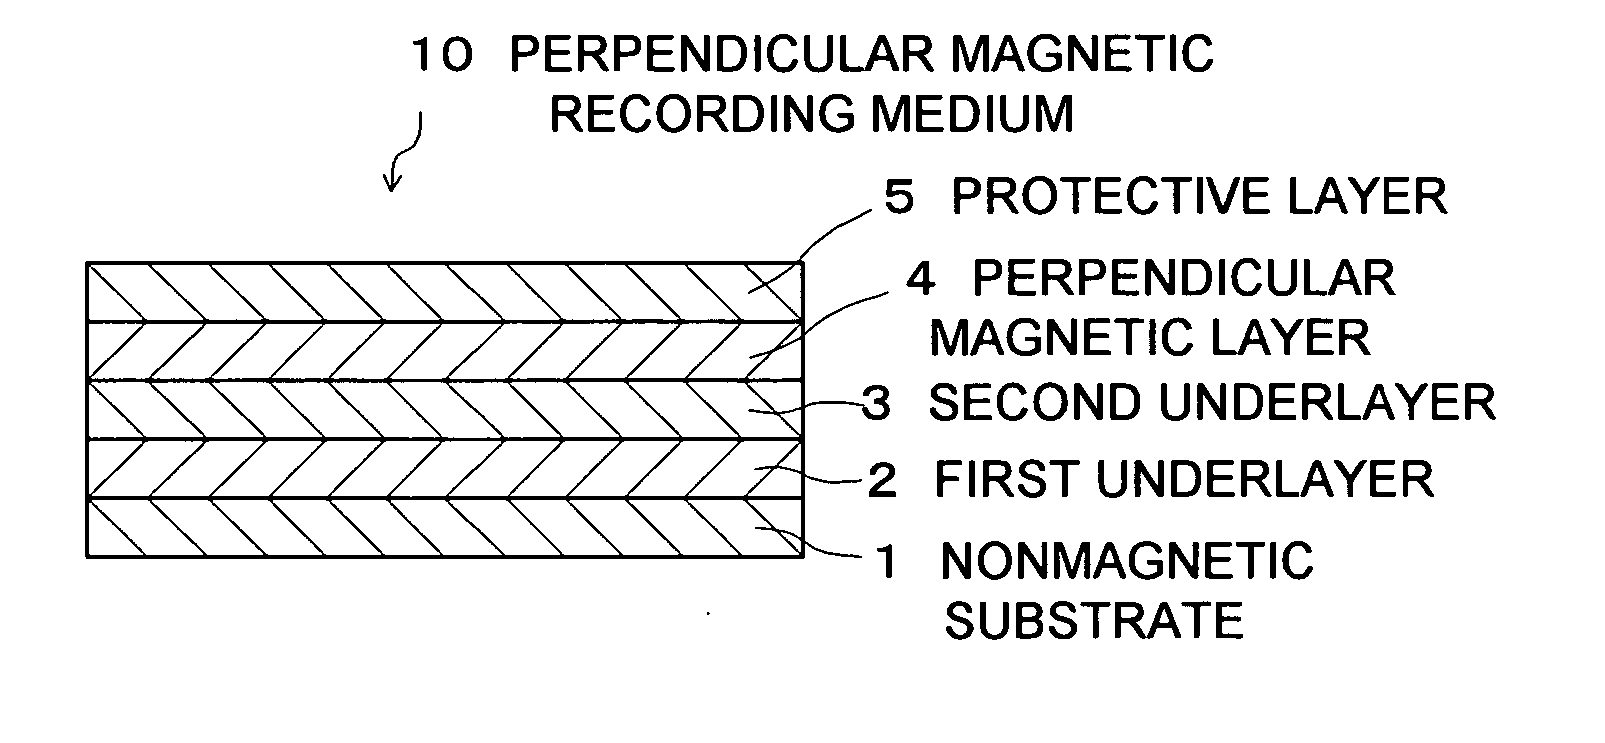 Perpendicular magnetic recording medium and magnetic recording/reproducing apparatus